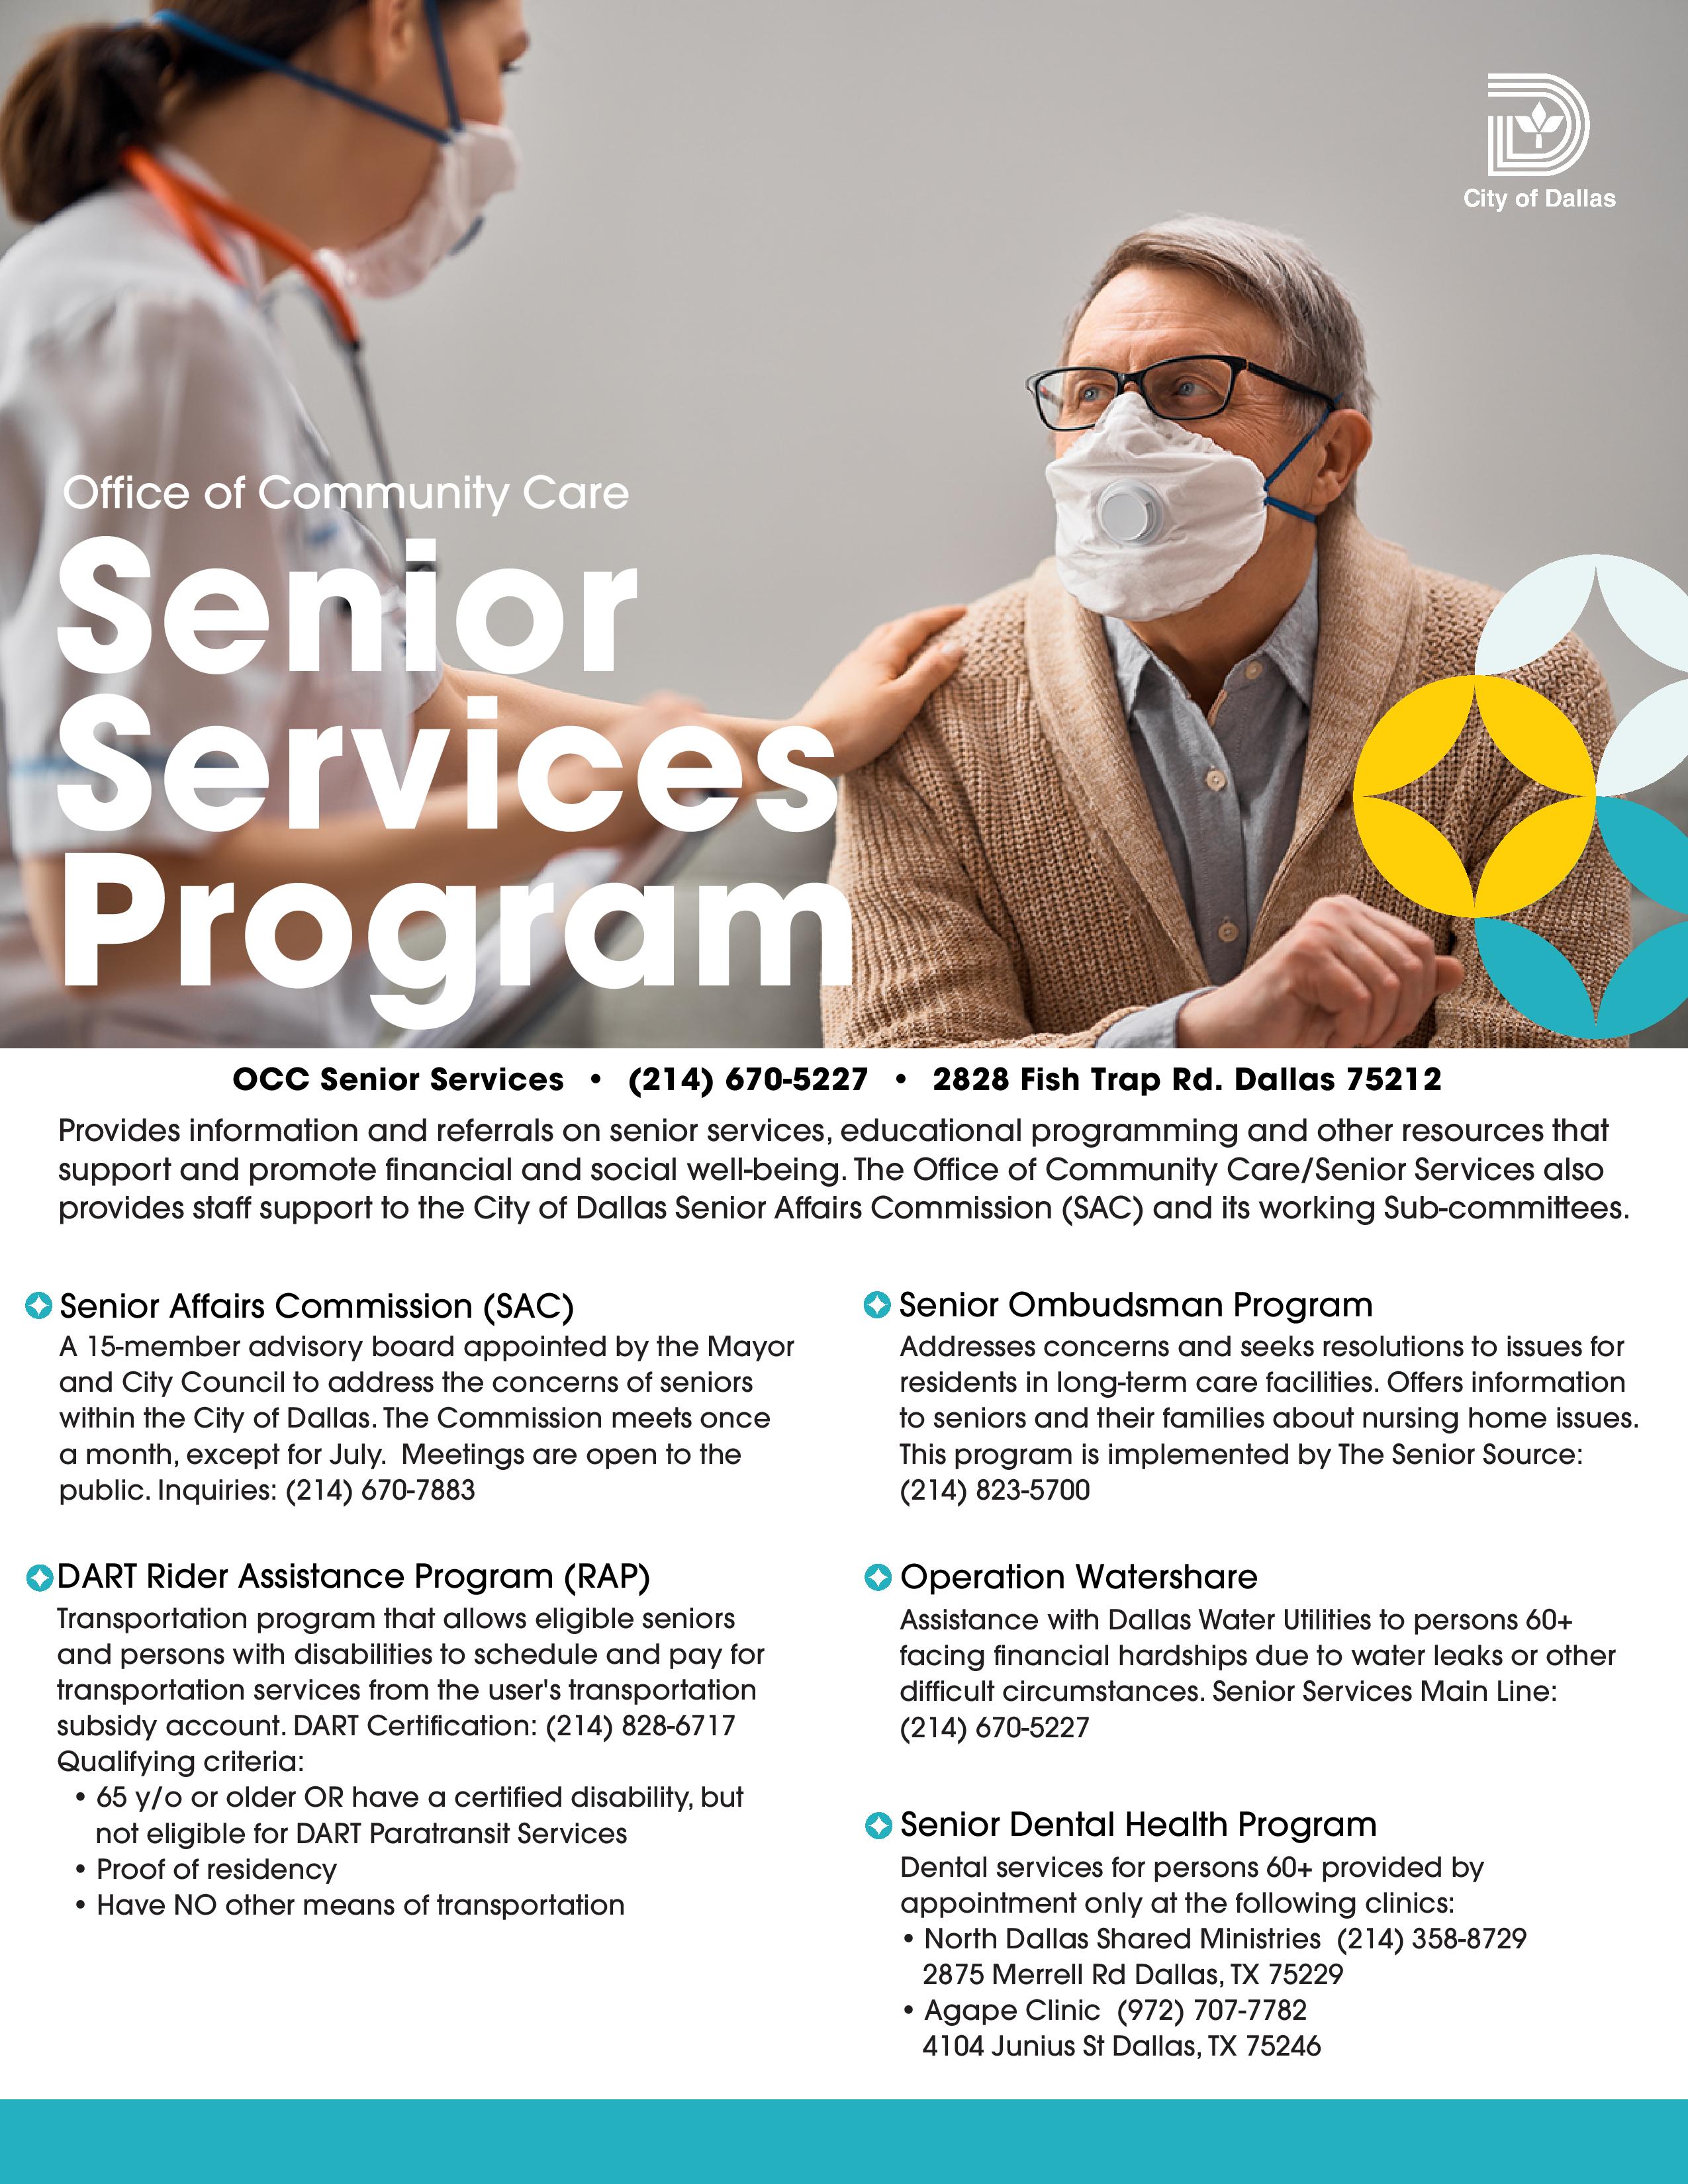 Senior Services Program Flyer.jpg